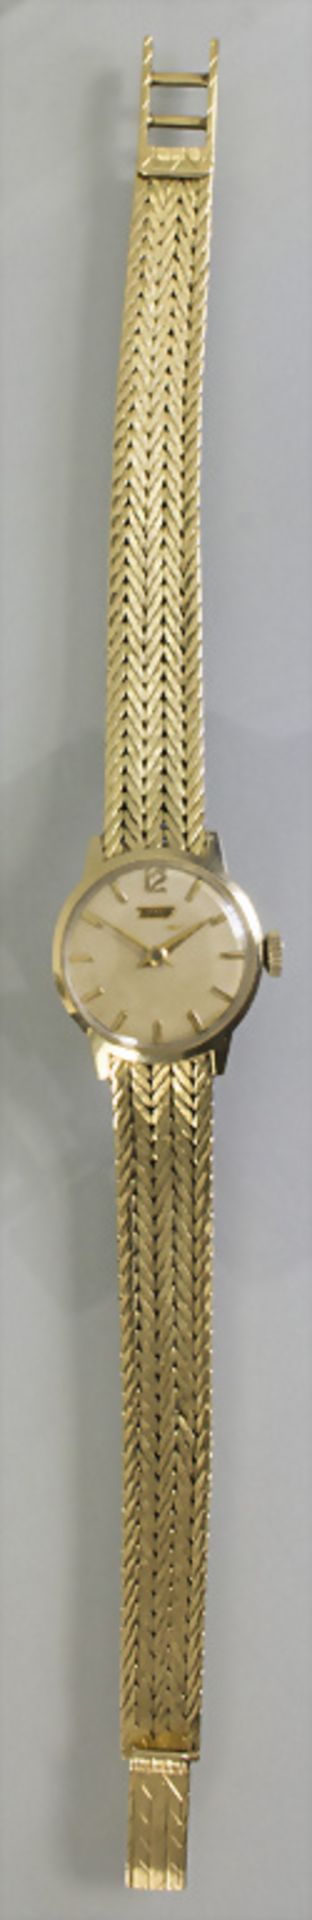 Damenarmbanduhr in Gold / An 18k gold ladies wristwatch, Tissot, Schweiz, um 1960 - Image 2 of 3